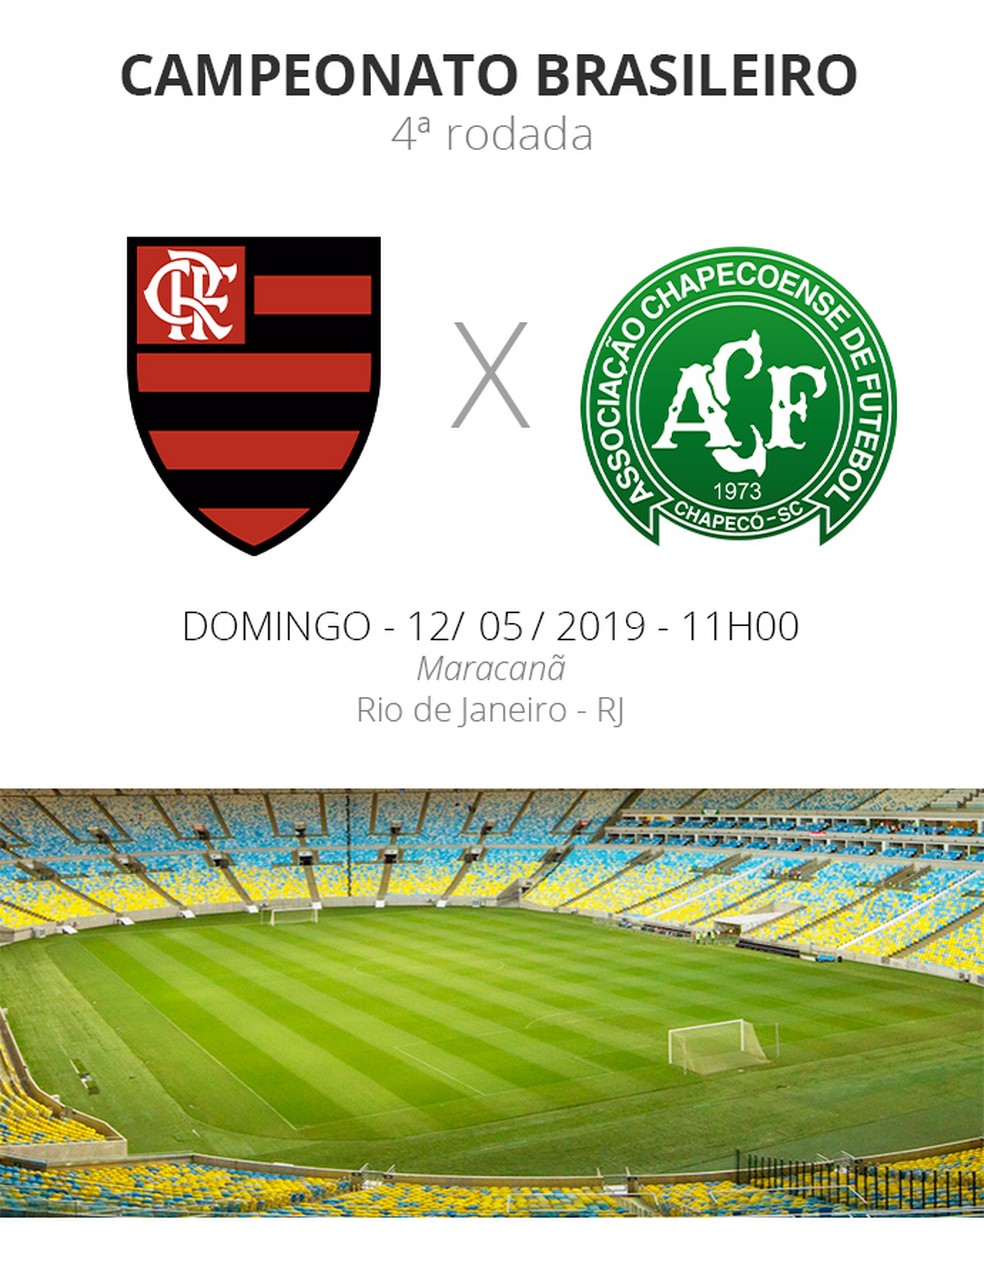 Chapecoense x Flamengo (08/11/2021) Campeonato Brasileiro 2021